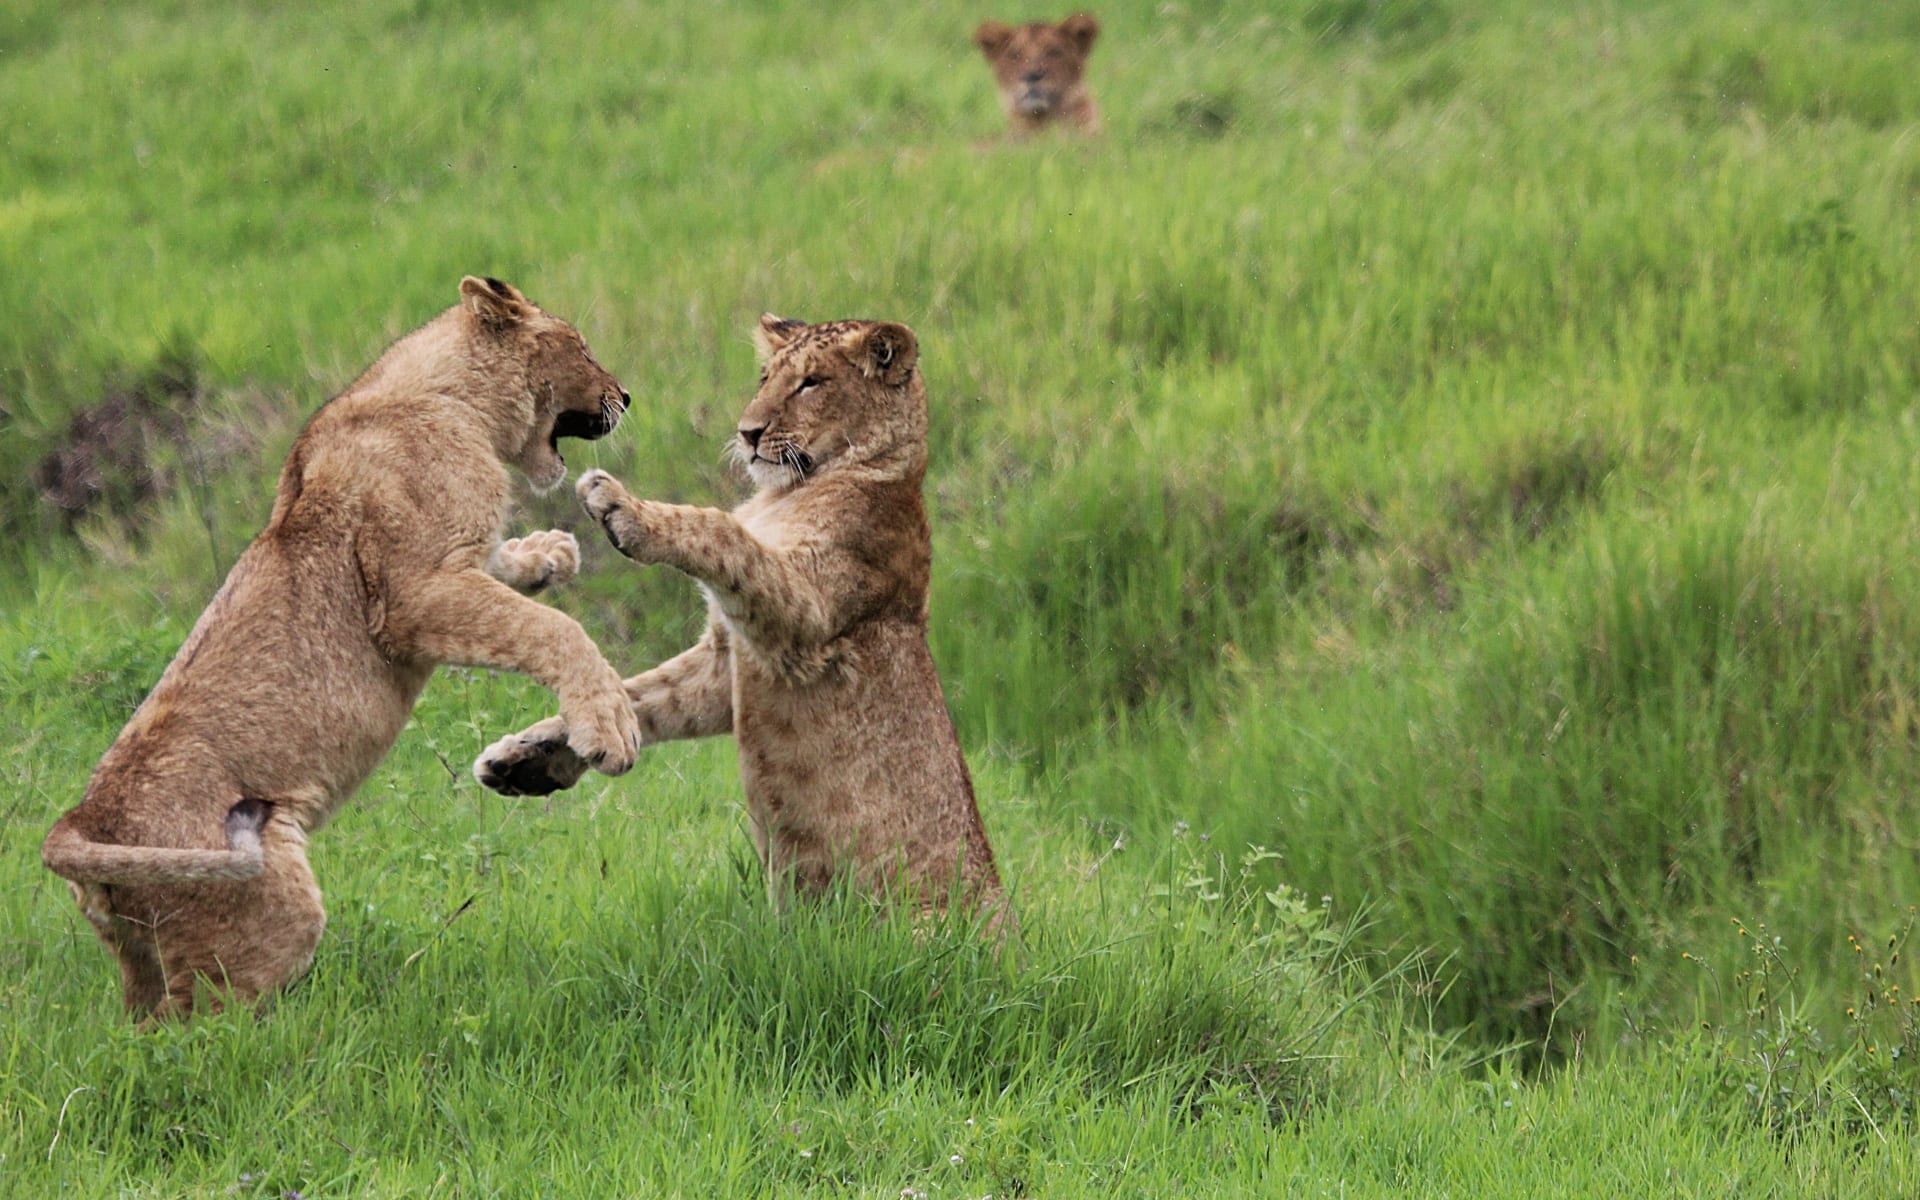 Serian_the_original_kenya_AB_Lion_Cubs_playing_ypjcel